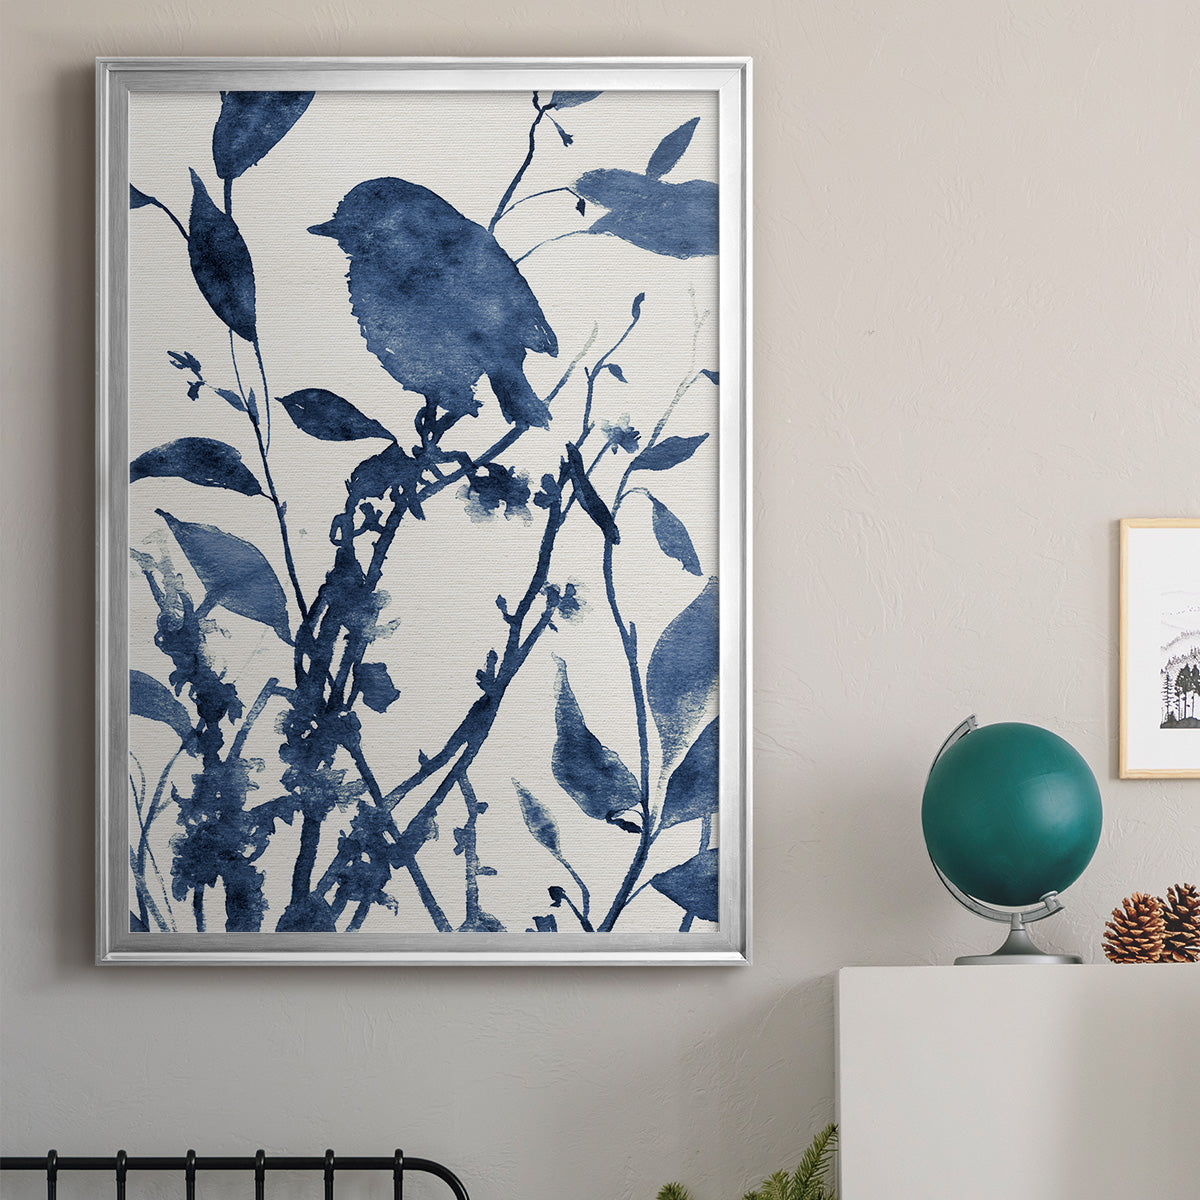 Bluebird Silhouette II Premium Framed Print - Ready to Hang